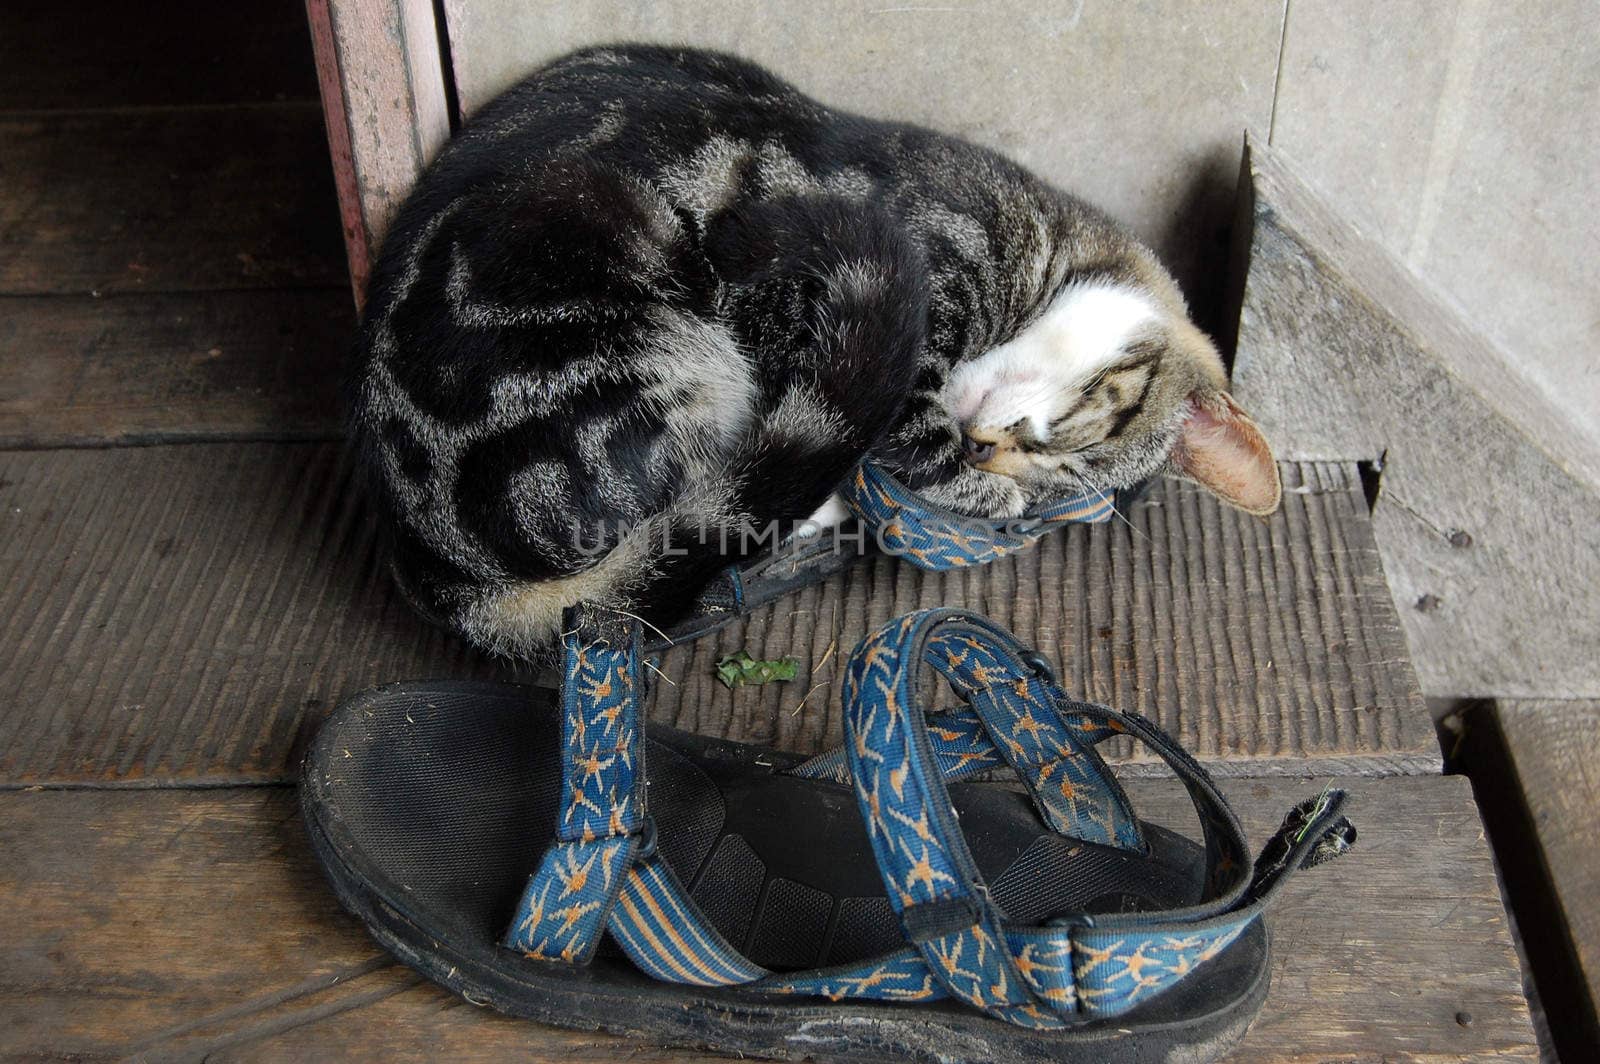 Cat sleeps in sandal, Papua New Guinea